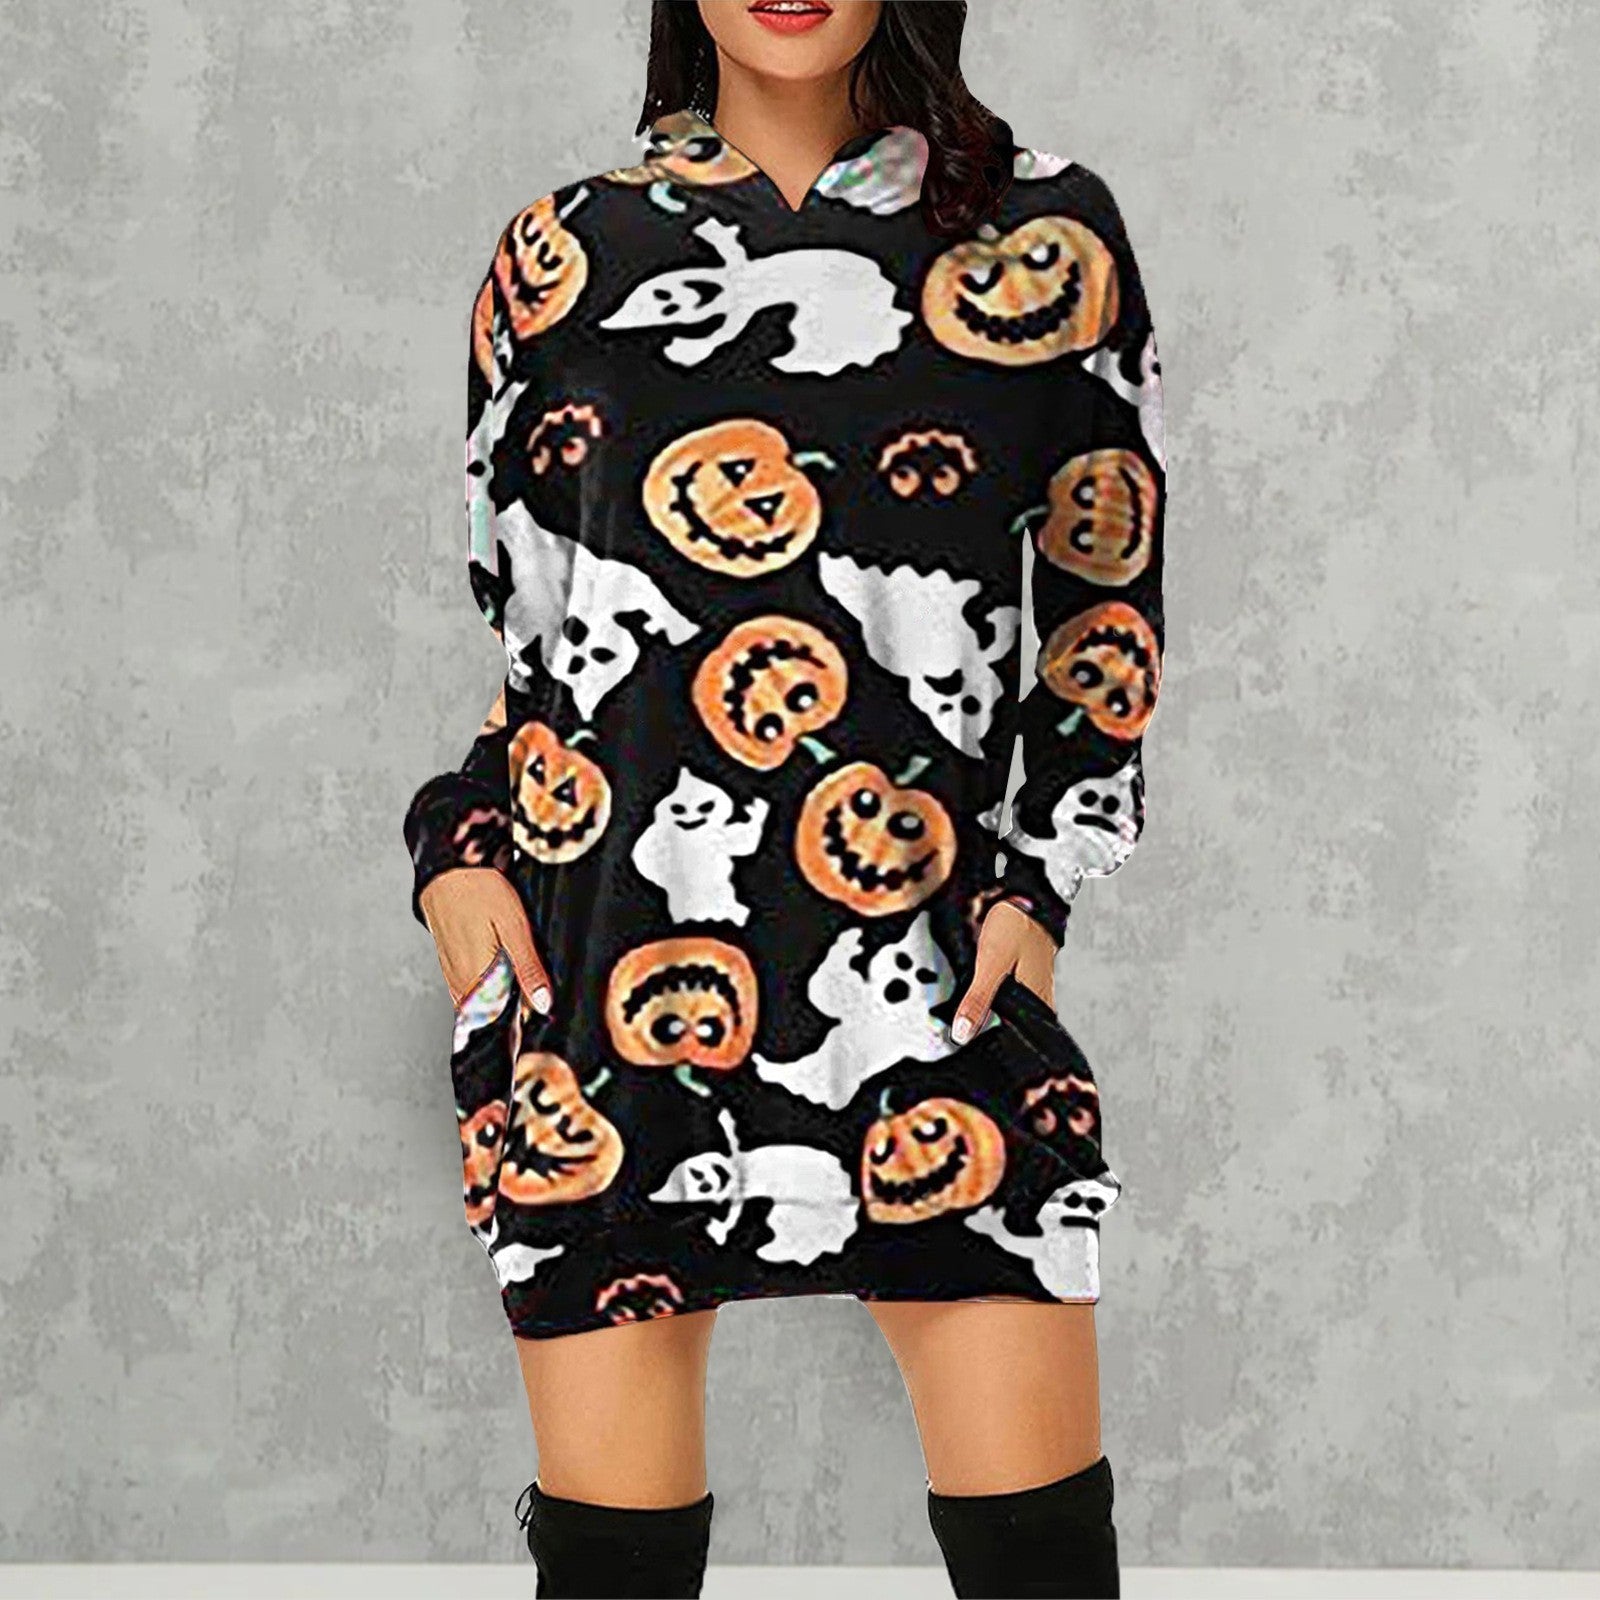 Halloween Pumpkin Design Long Sleeves Hoodies for Women-Black Grimace+Pumpkin-S-Free Shipping at meselling99